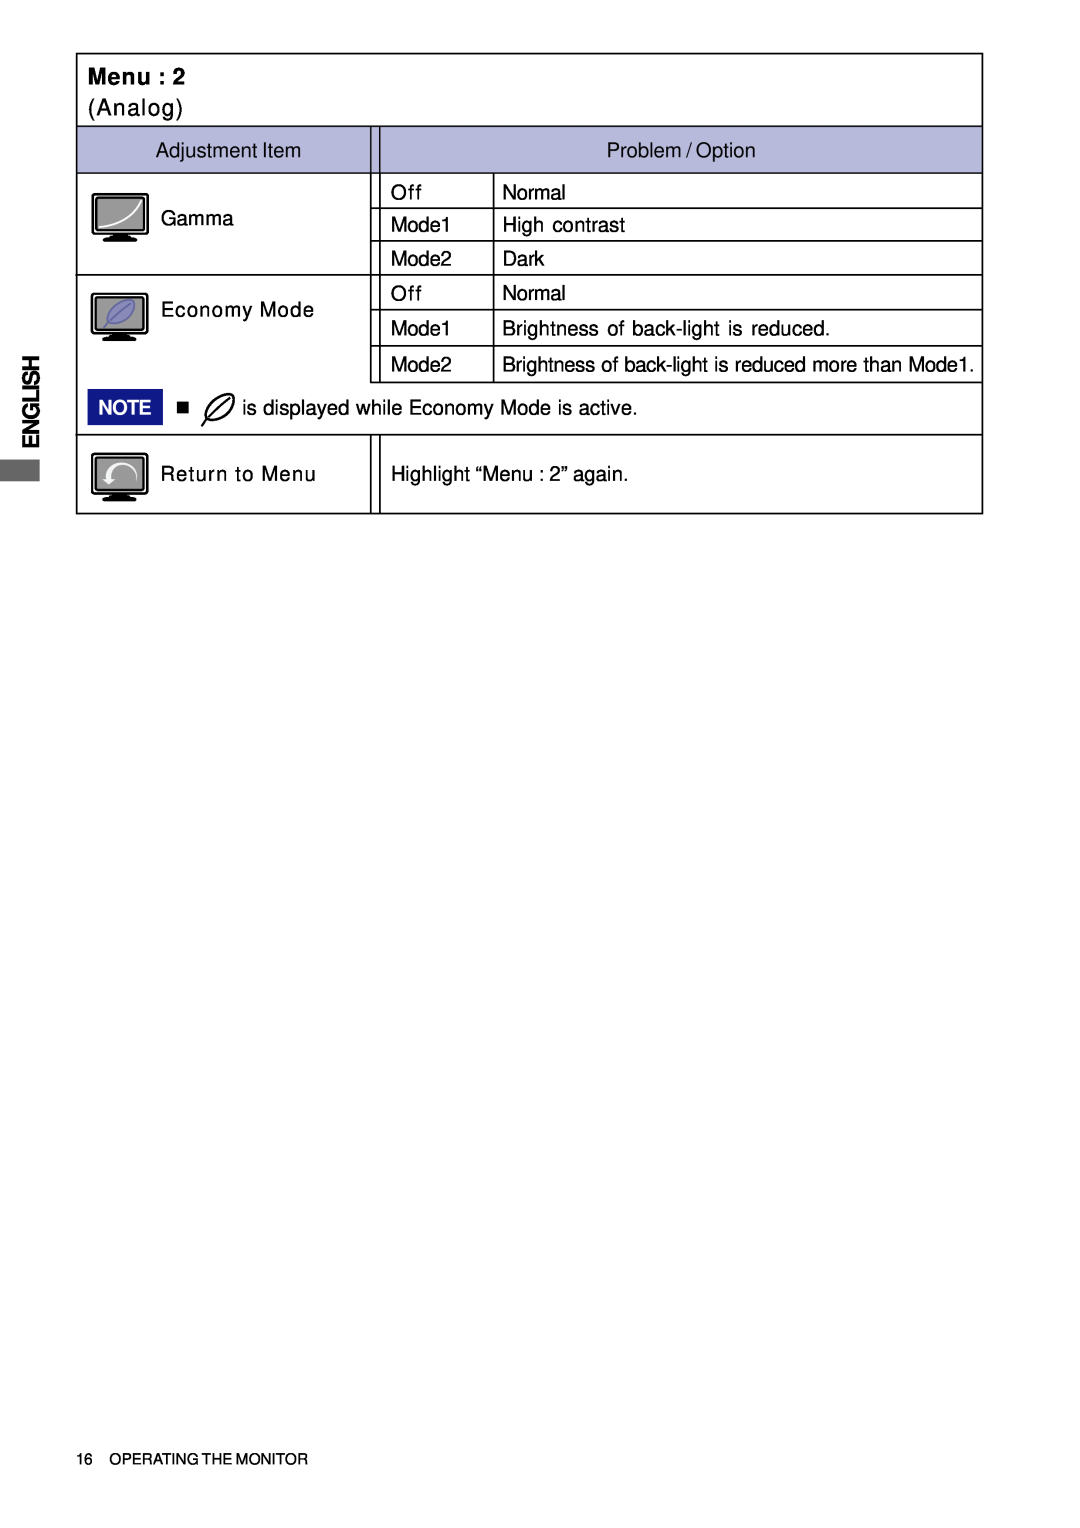 Iiyama E2201W, E2202WSV user manual Menu, Analog, English, Operating The Monitor 